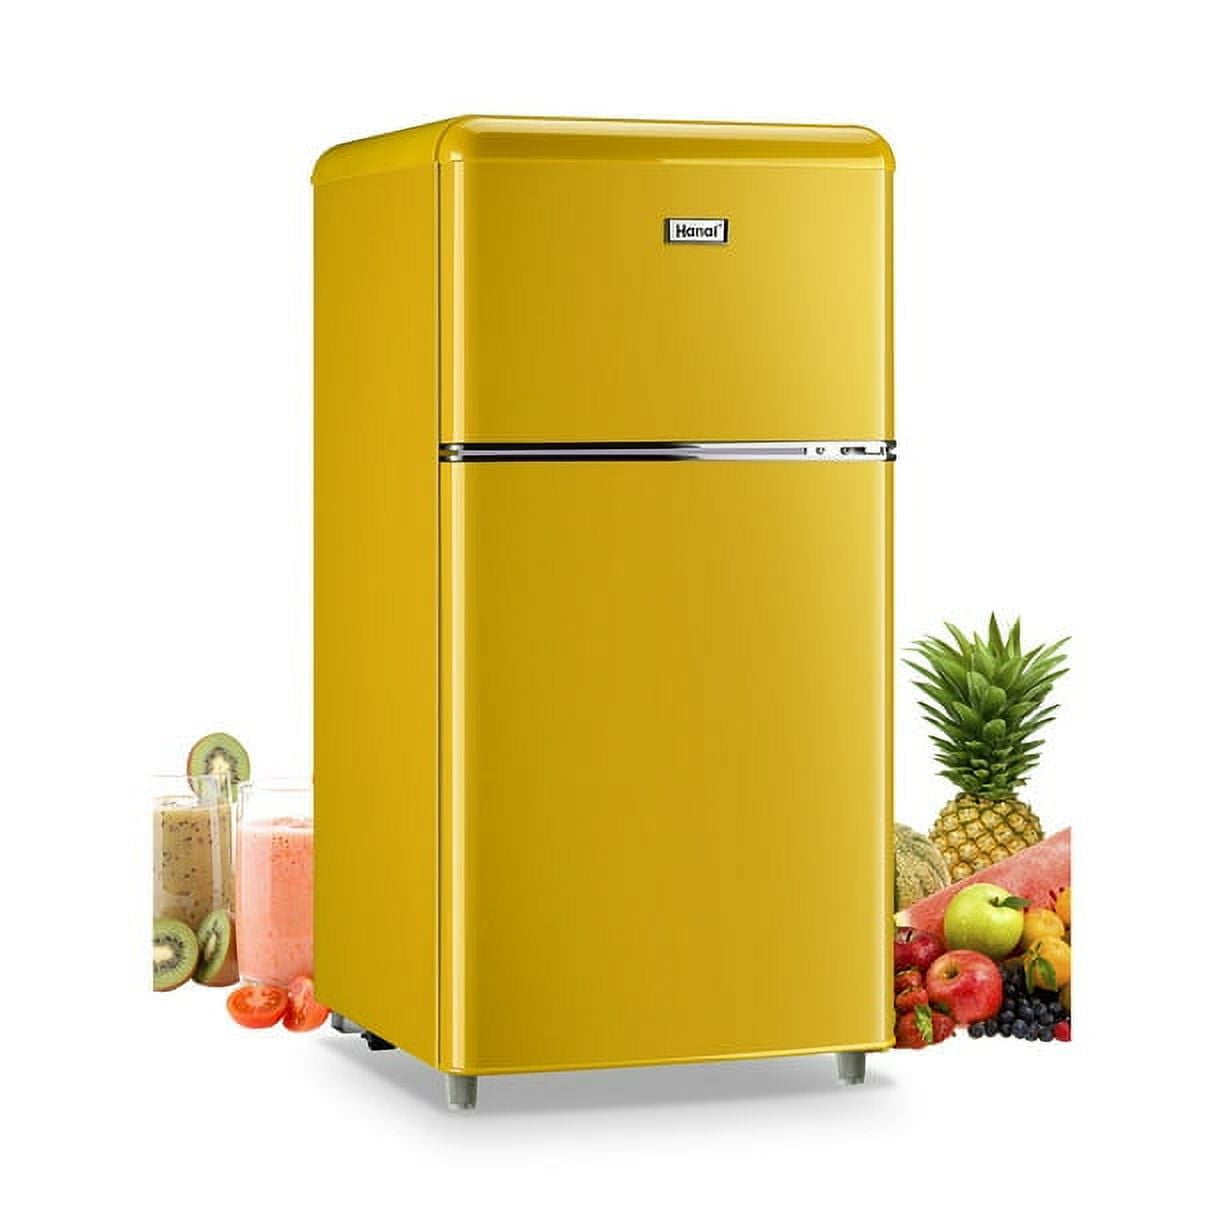 WANAI Compact Refrigerator, 3.5 Cu.Ft Retro Mini Fridge with Freezer, Dual  Door Small Refrigerator with 7 TEMP Modes, LED Lights, Removable Shelves